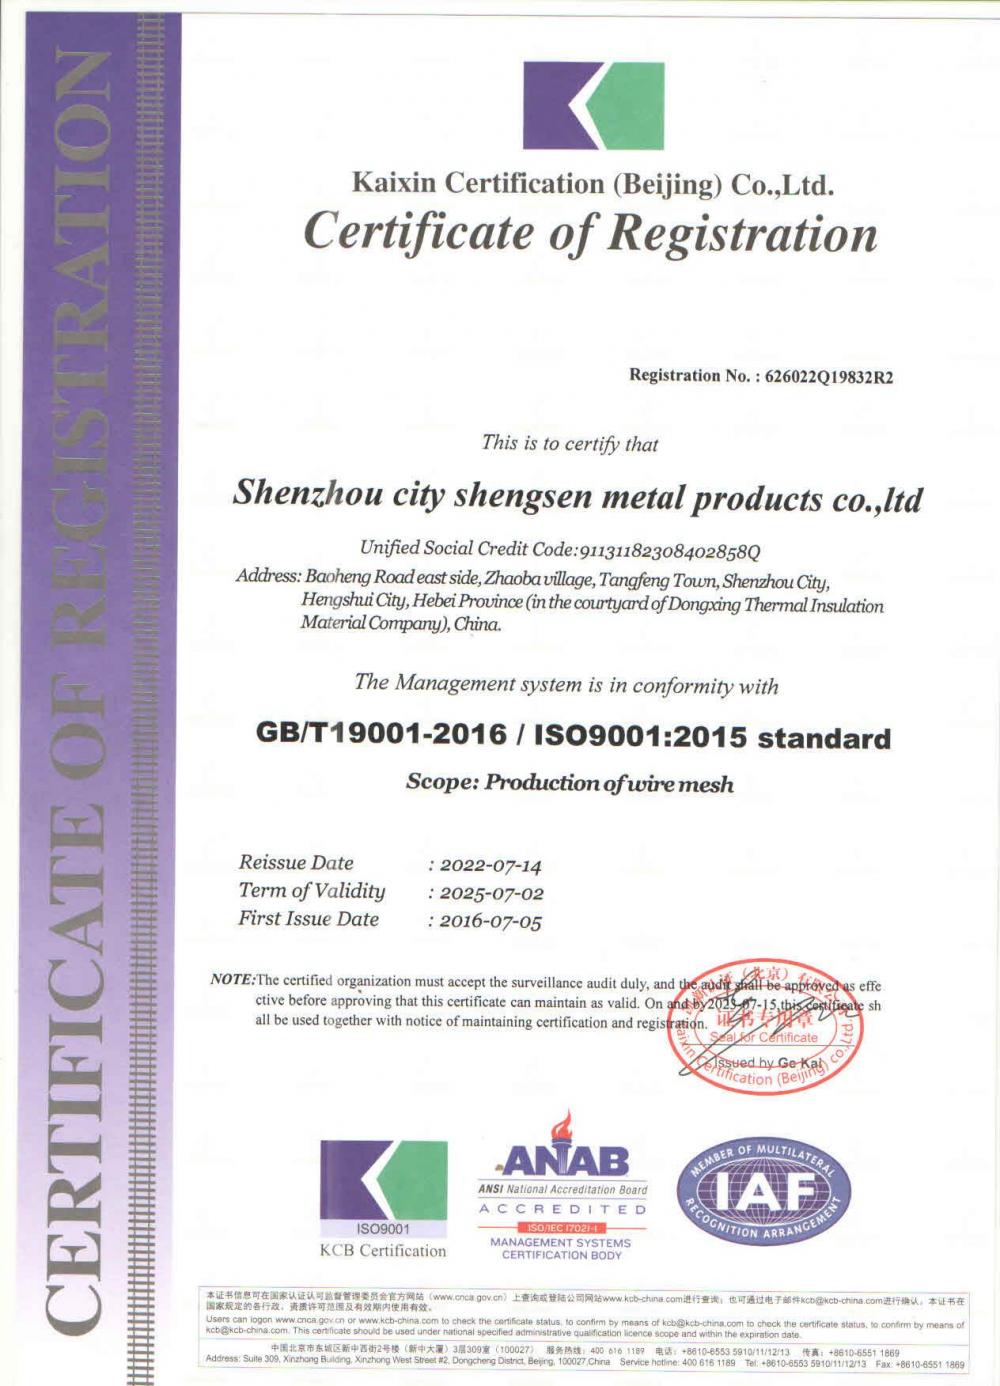 GB/T19001-2016/ISO9001:2015 standard